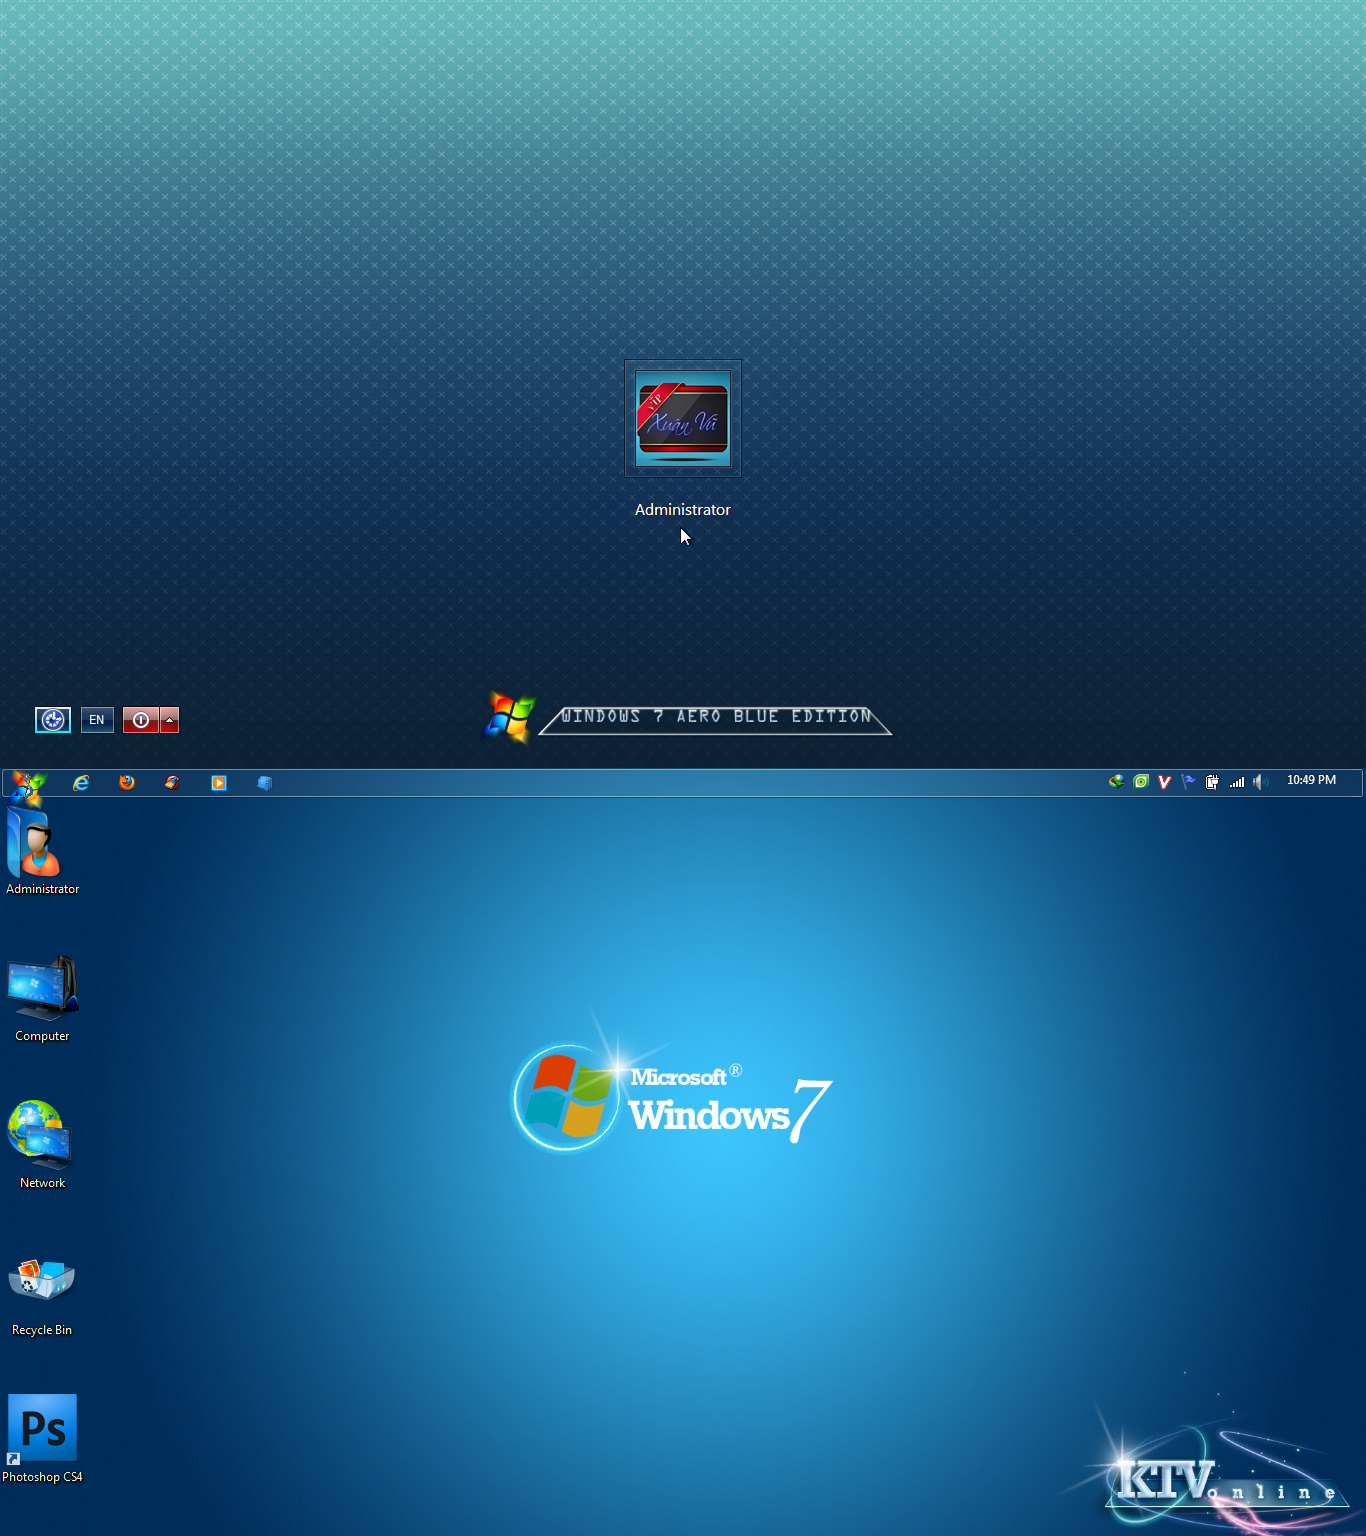 Windows 7 aero blue lite edition